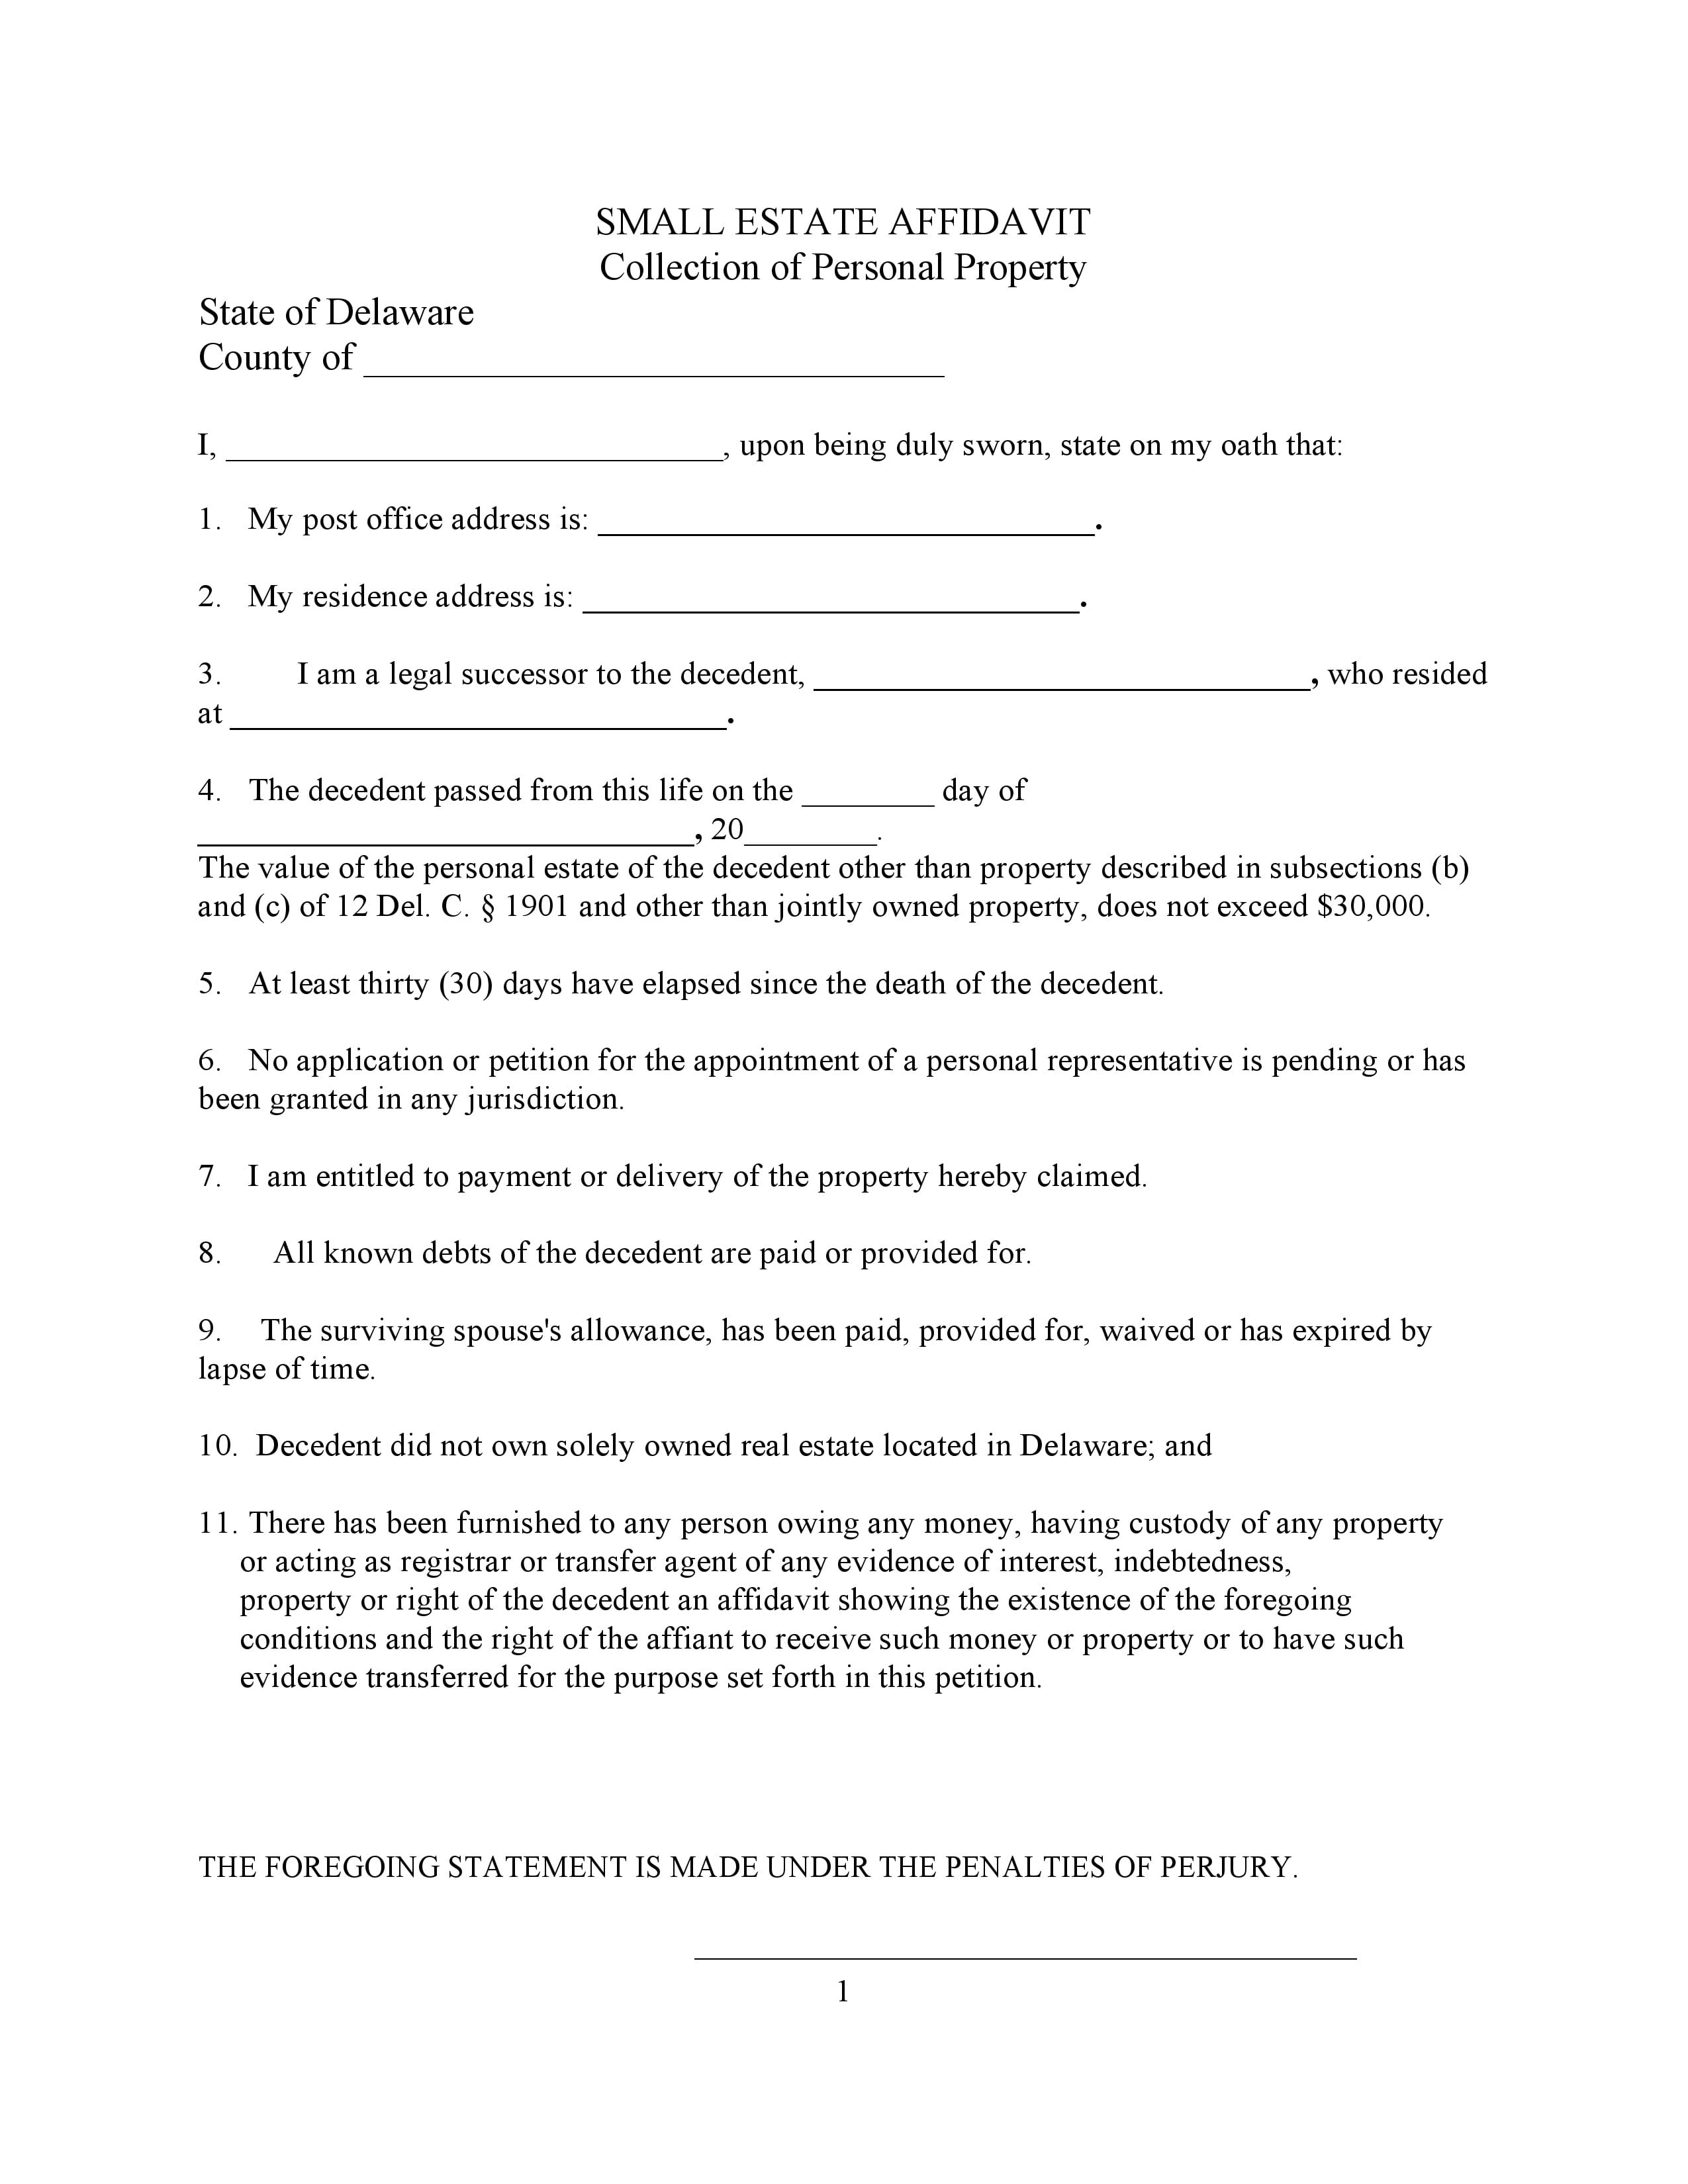 Delaware Small Estate Affidavit Form